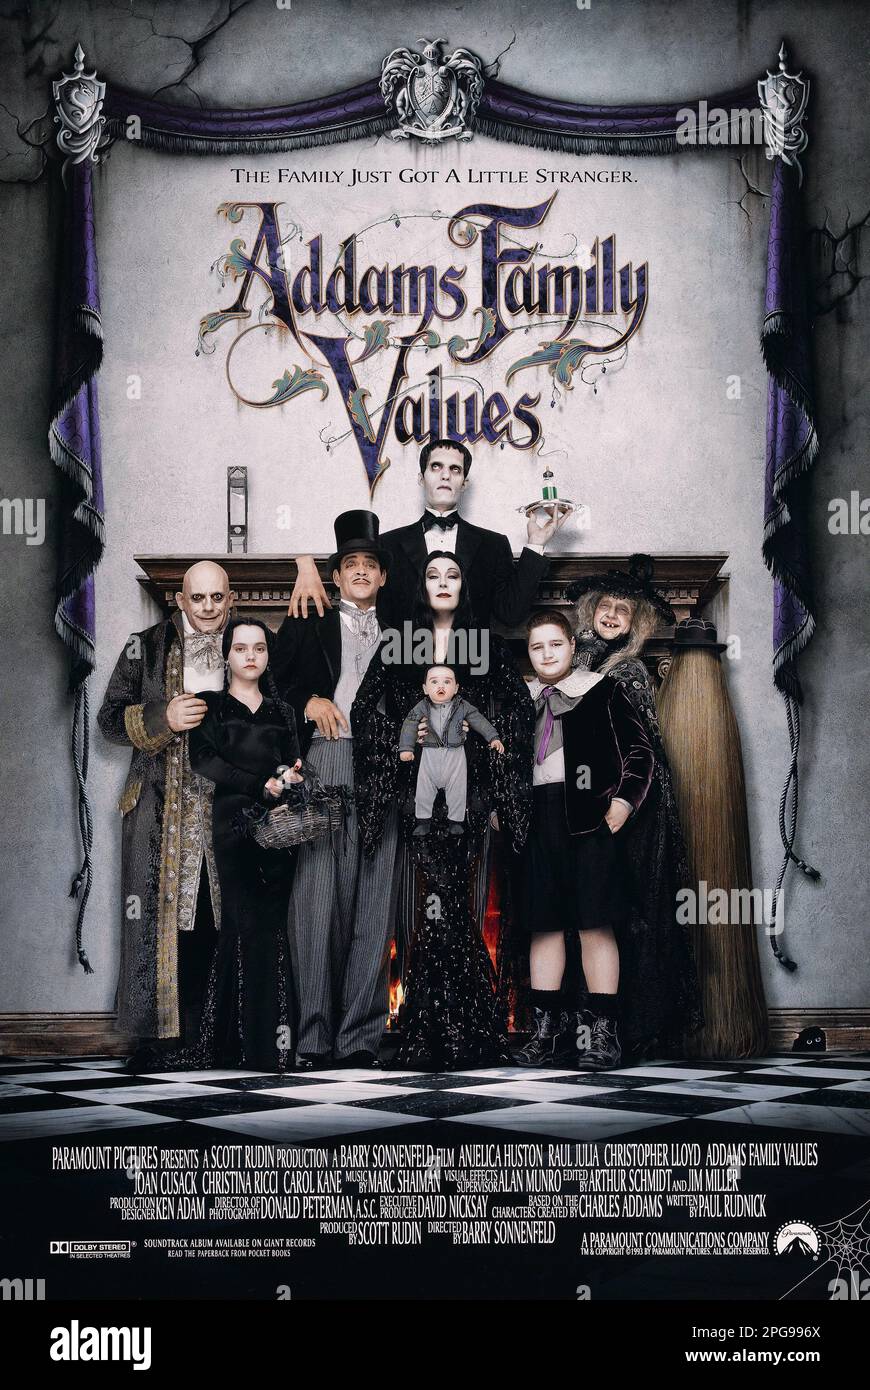 Addams Family Values poster Stock Photo